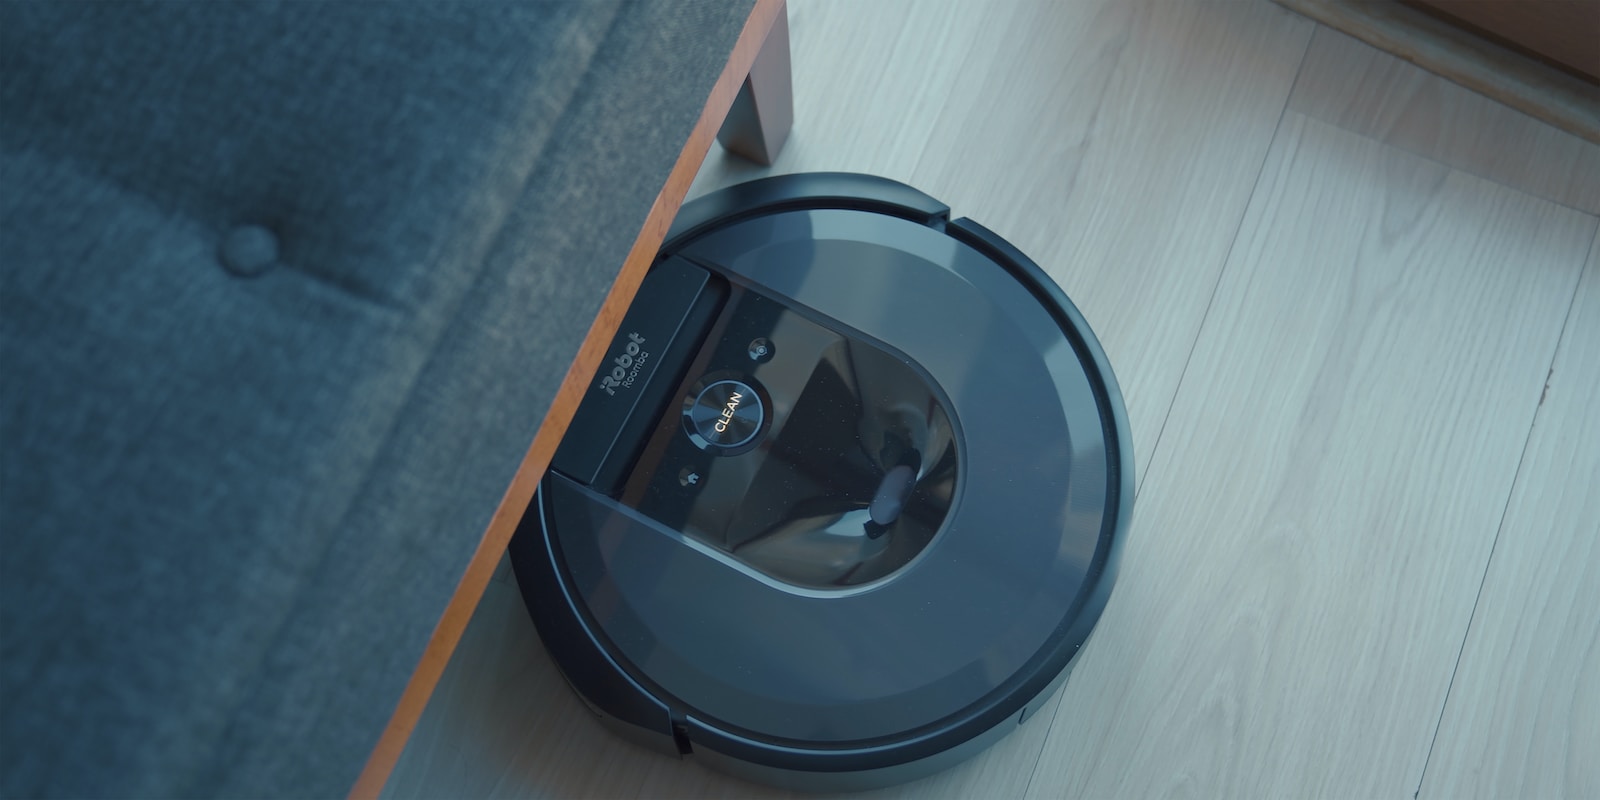 The Roomba i7+ tech gadget